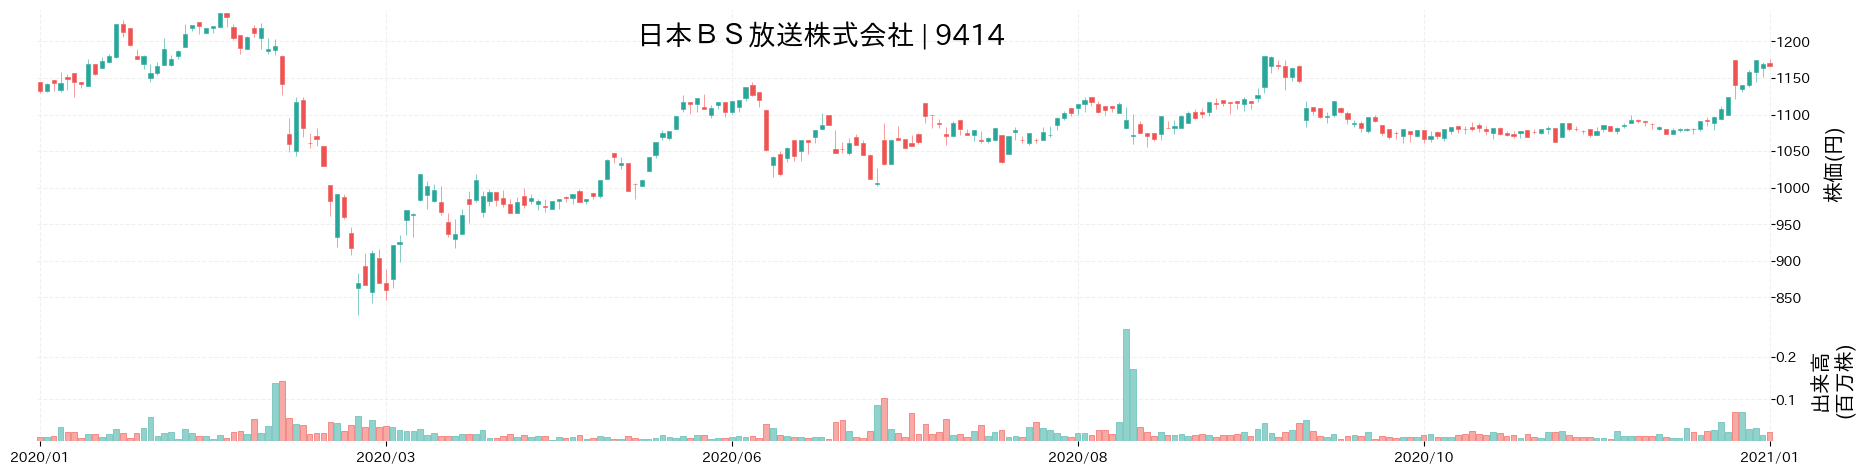 日本BS放送の株価推移(2020)